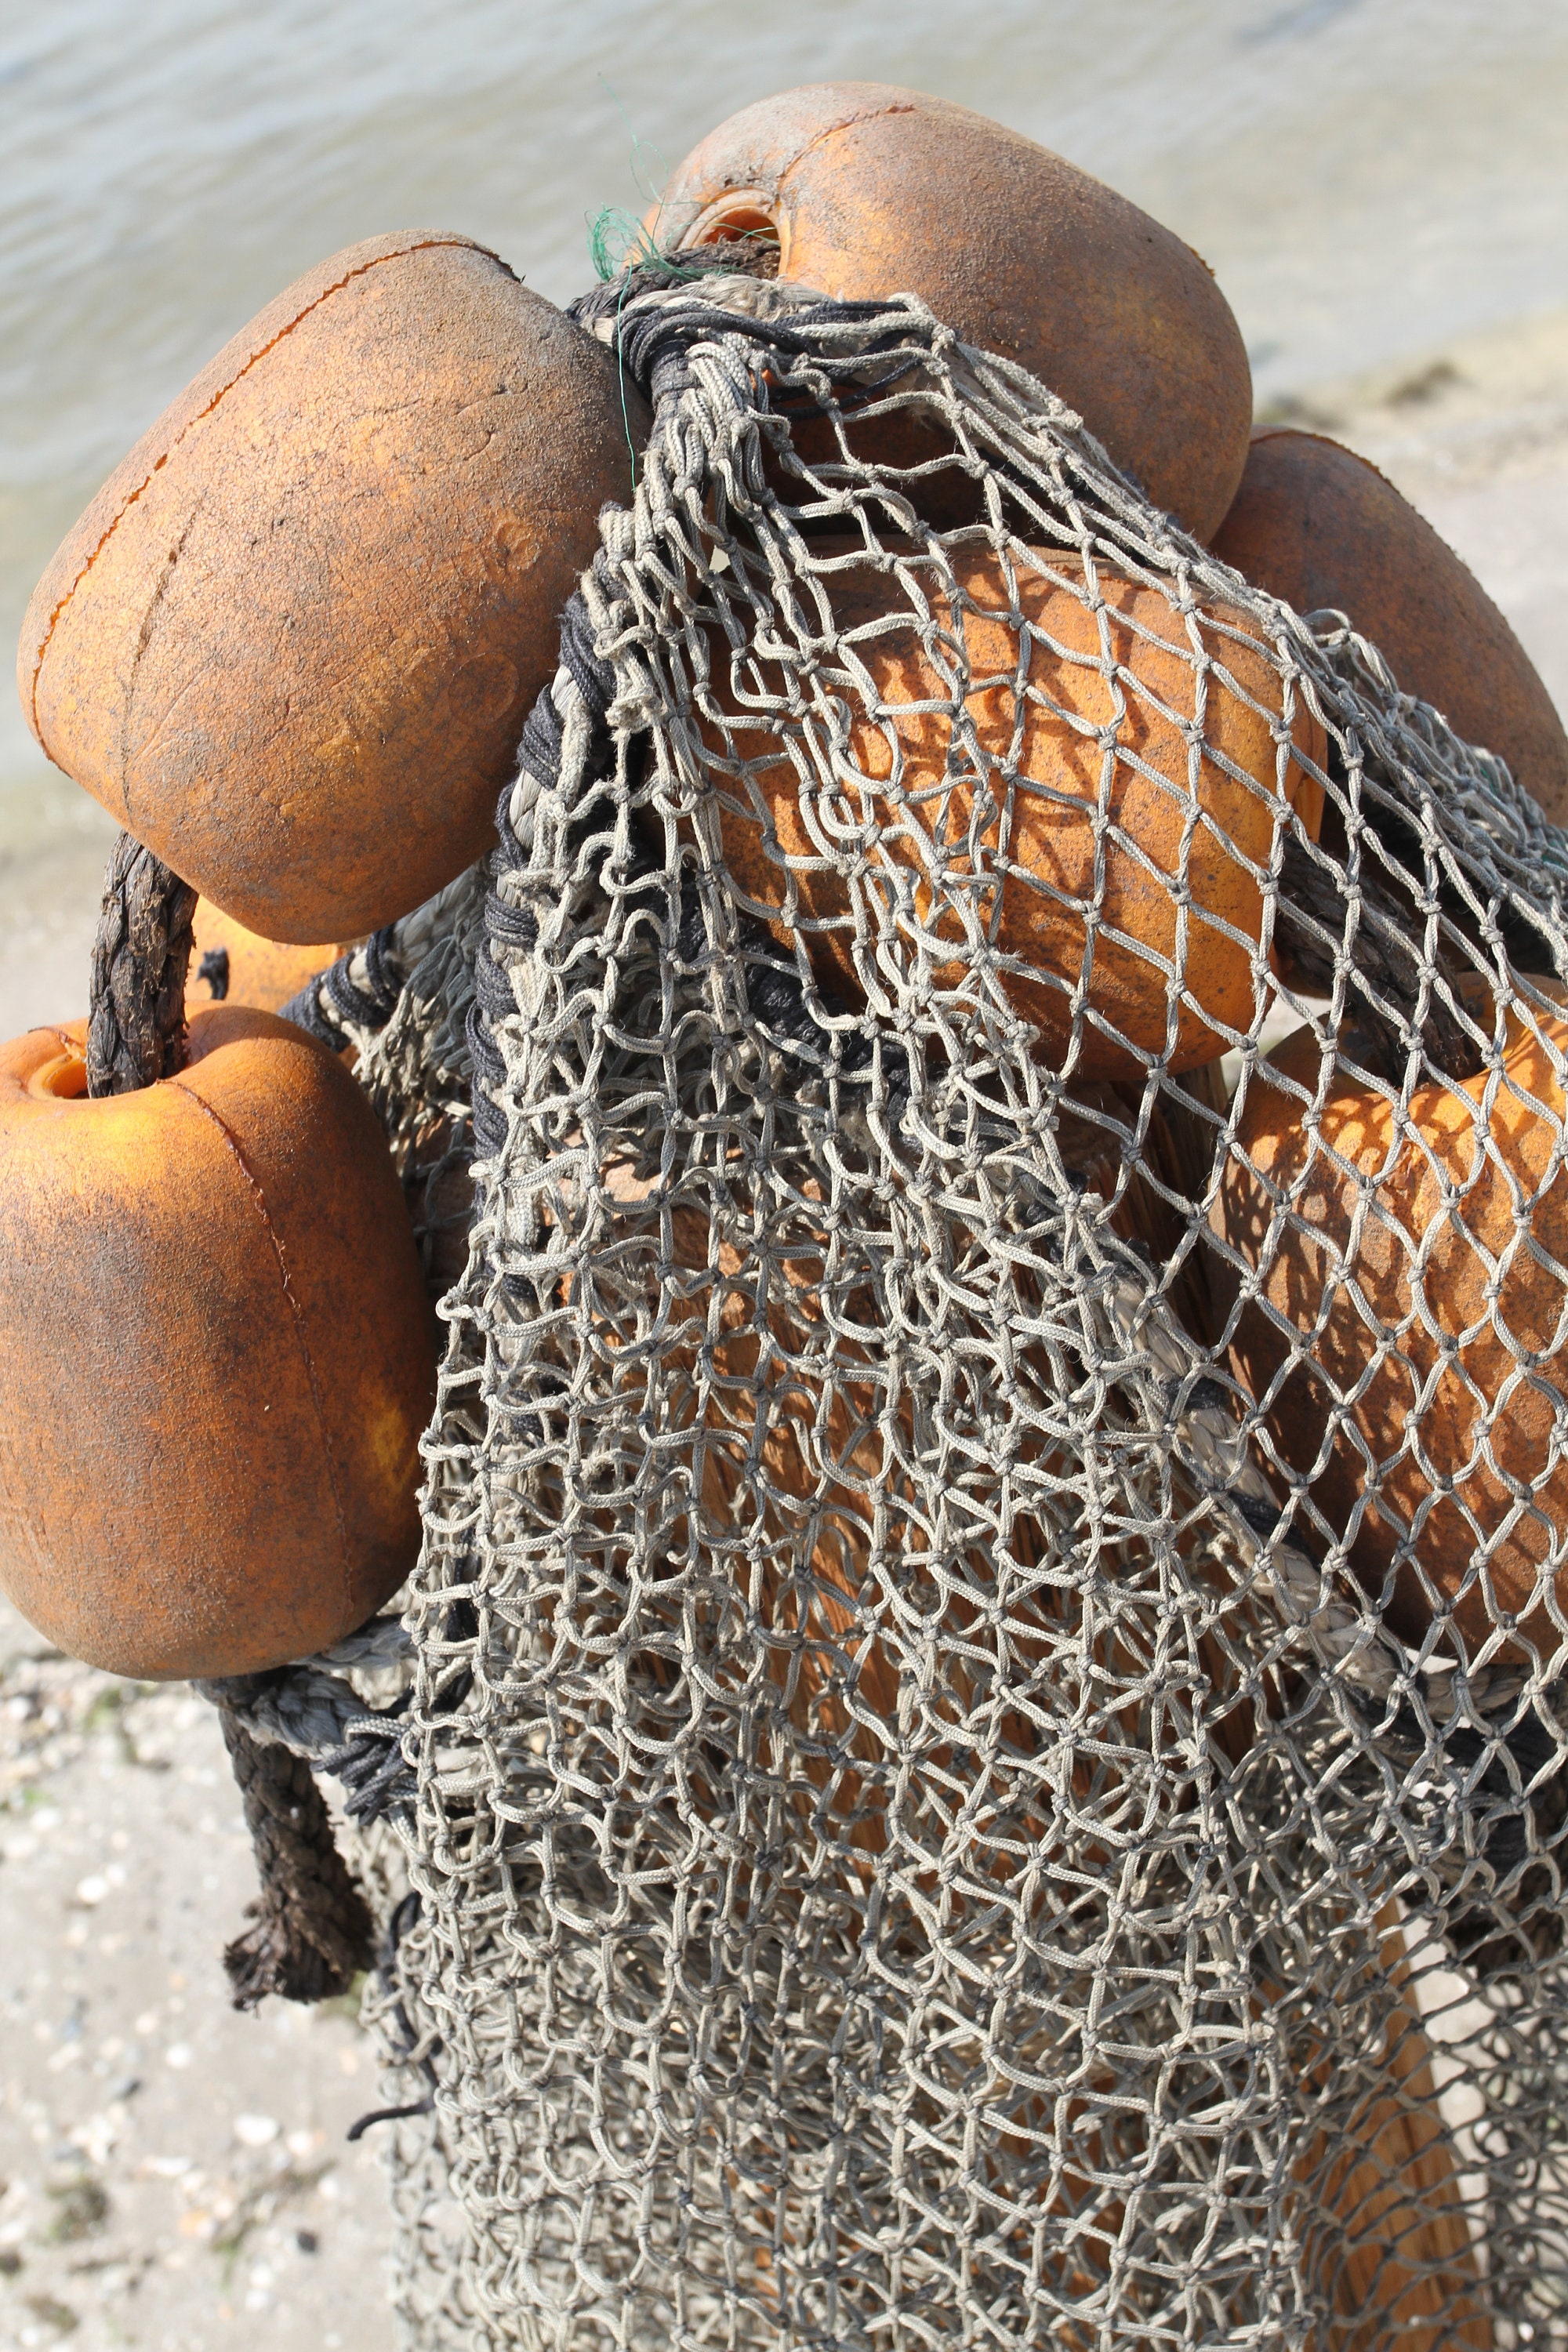 Decorative Fish Net with Shells and Cork - TikiKev